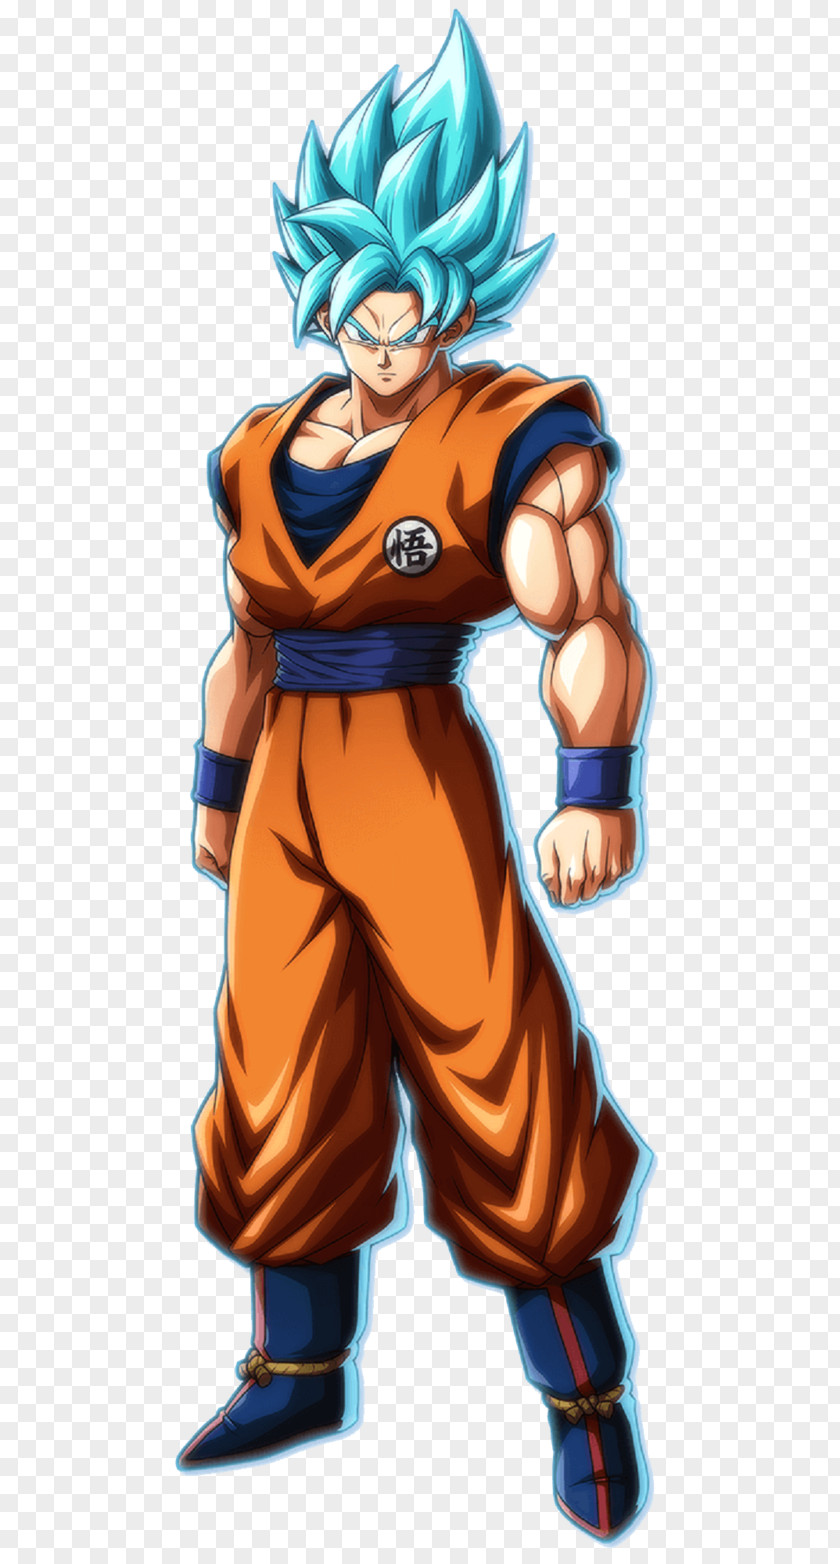 Goku Dragon Ball FighterZ Vegeta Gohan Piccolo PNG